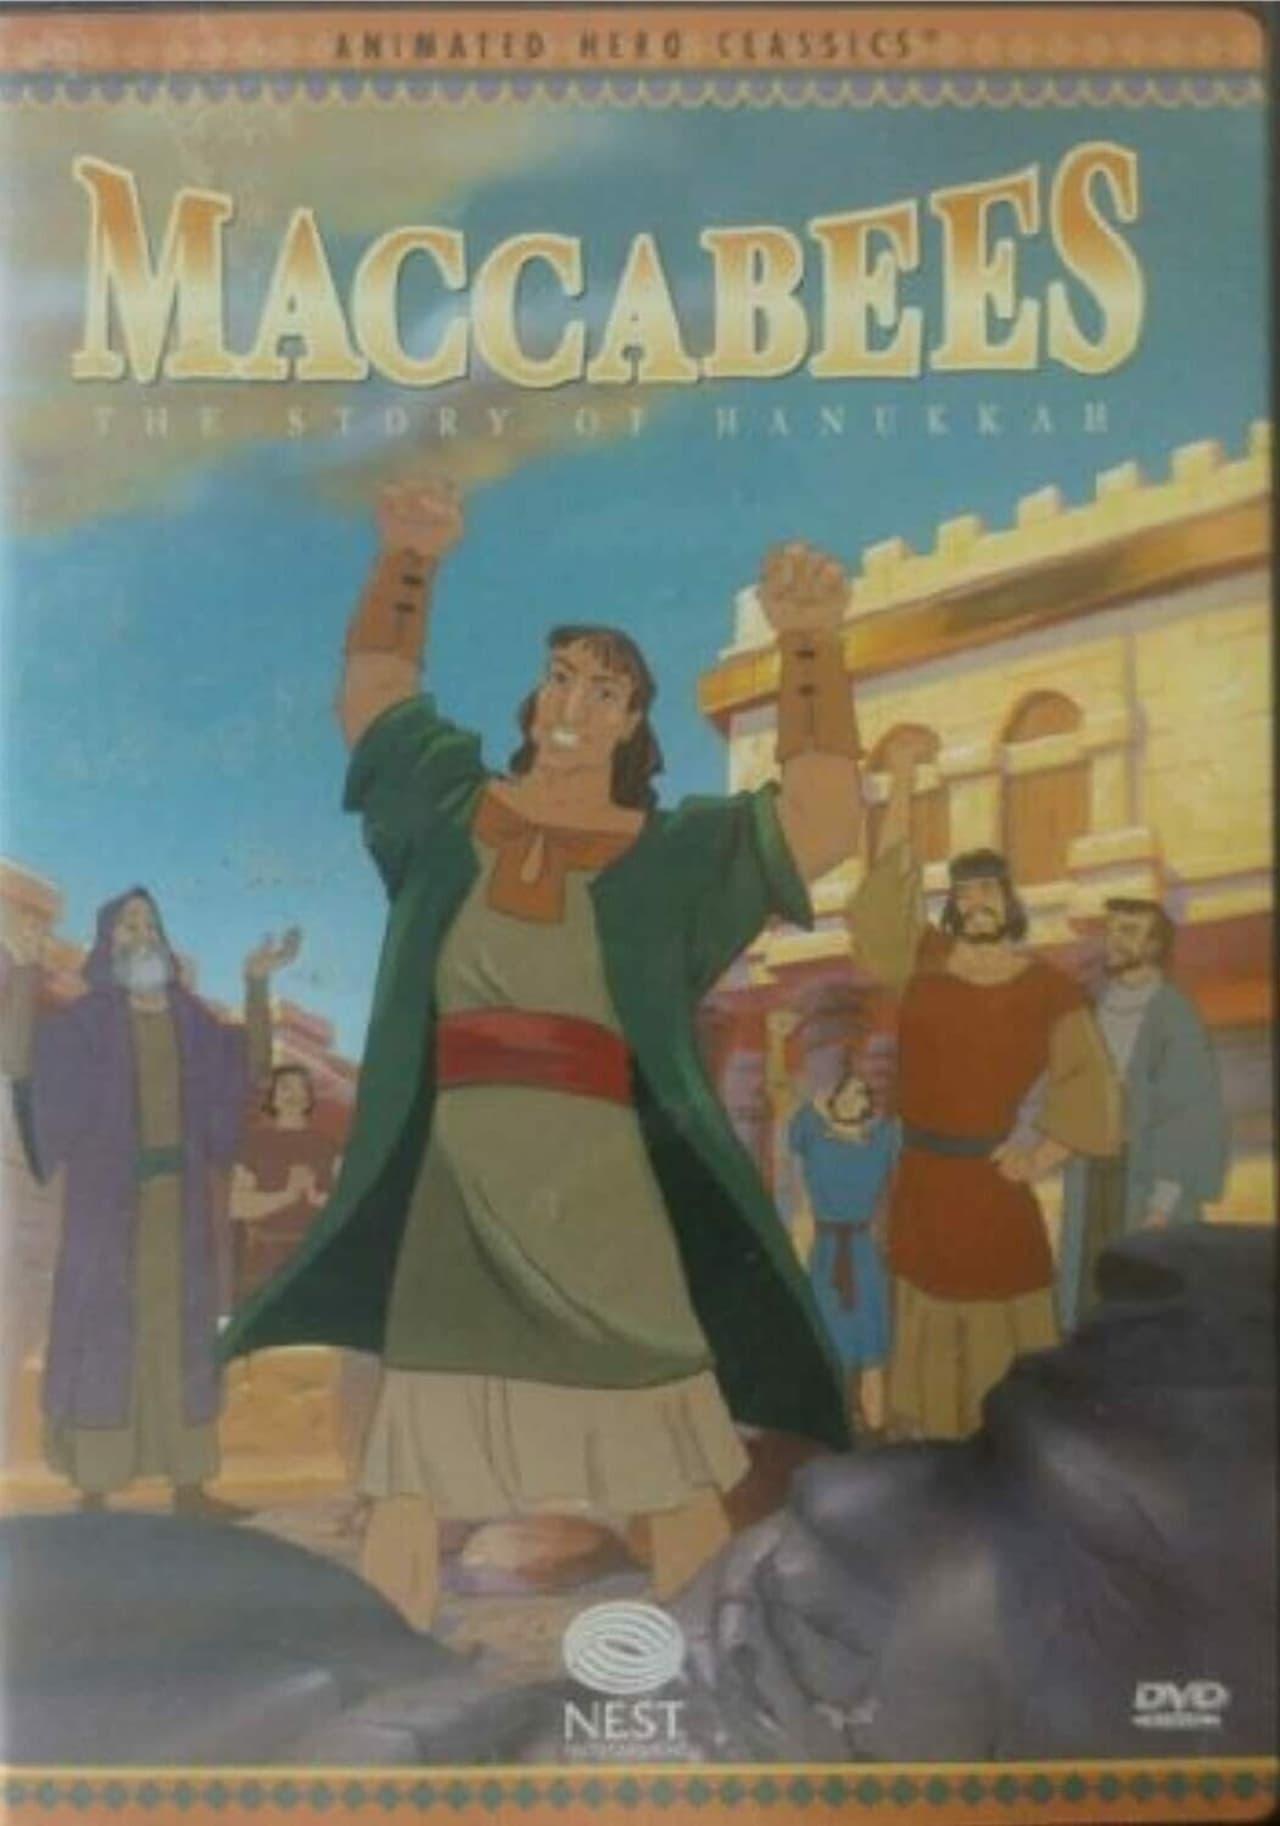 Animated Hero Classics: Maccabees poster